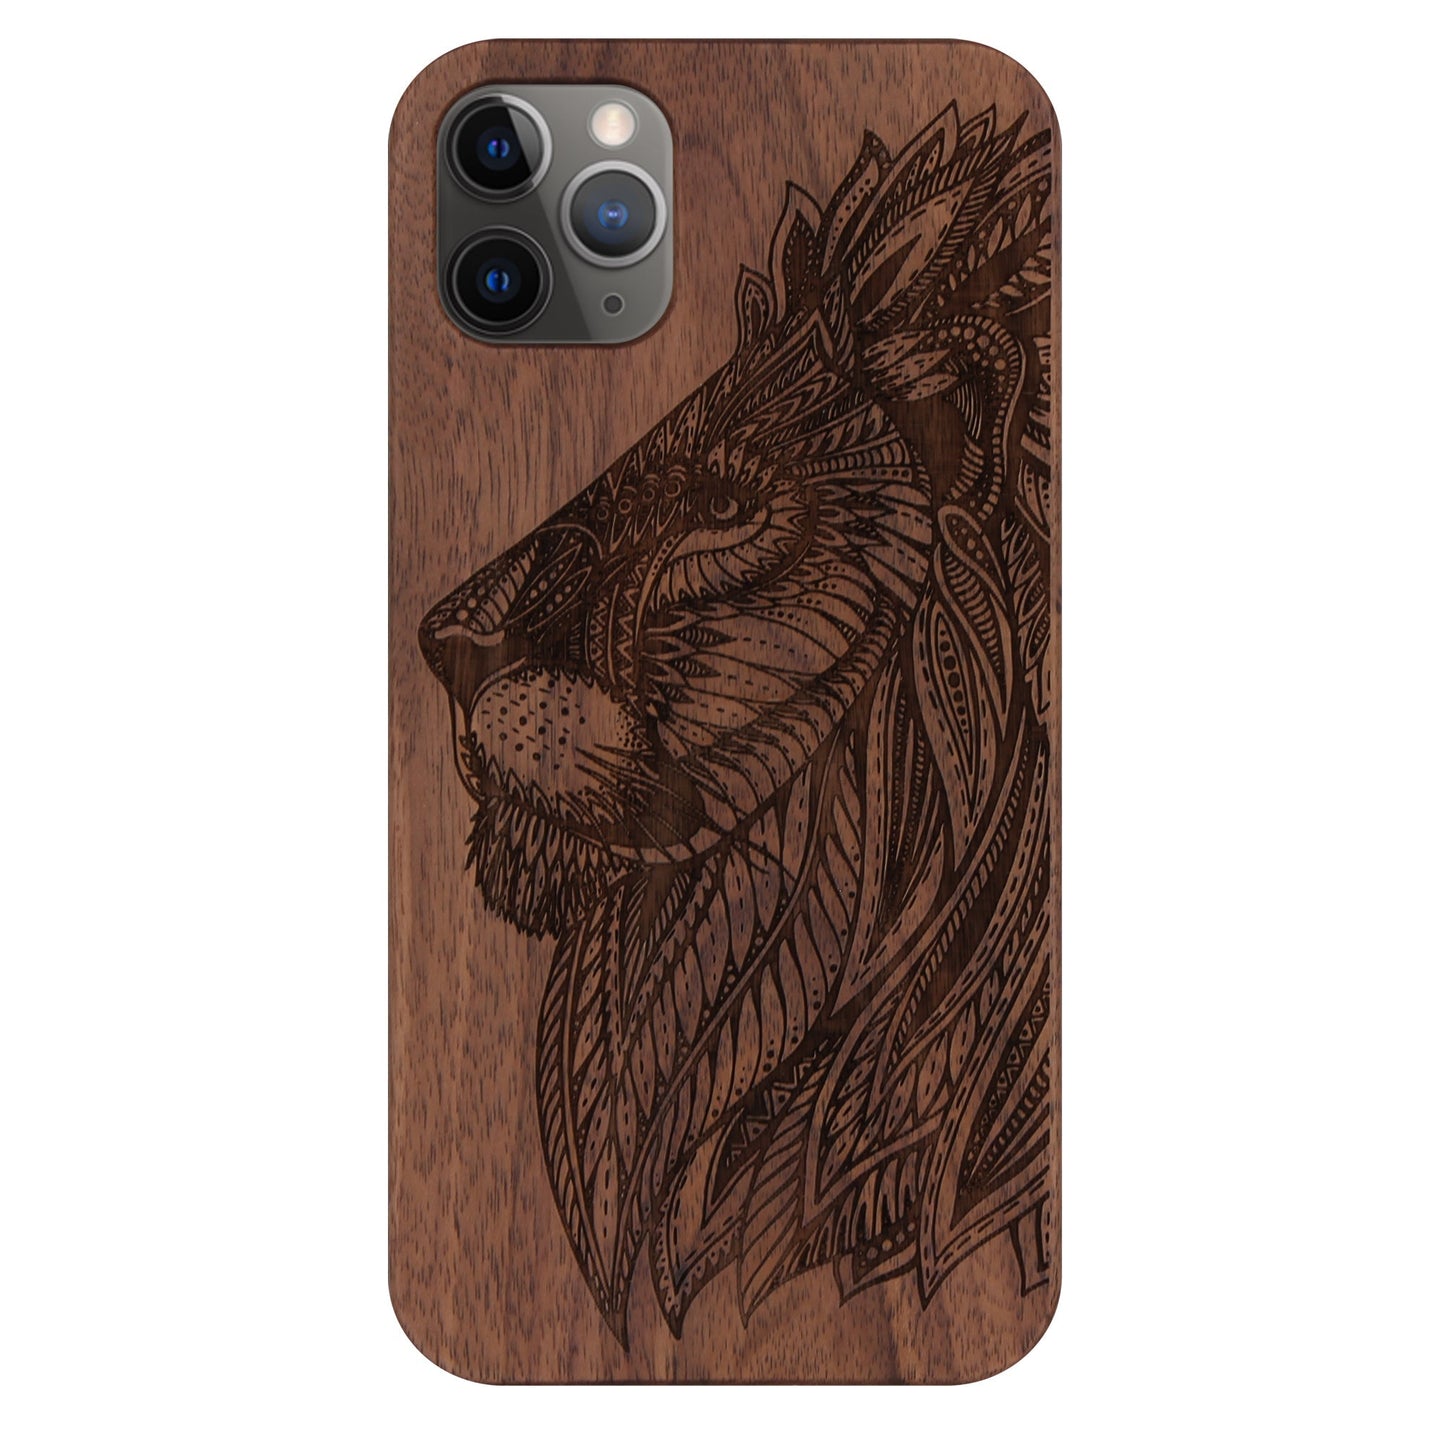 Walnut lion Eden case for iPhone 11 Pro 